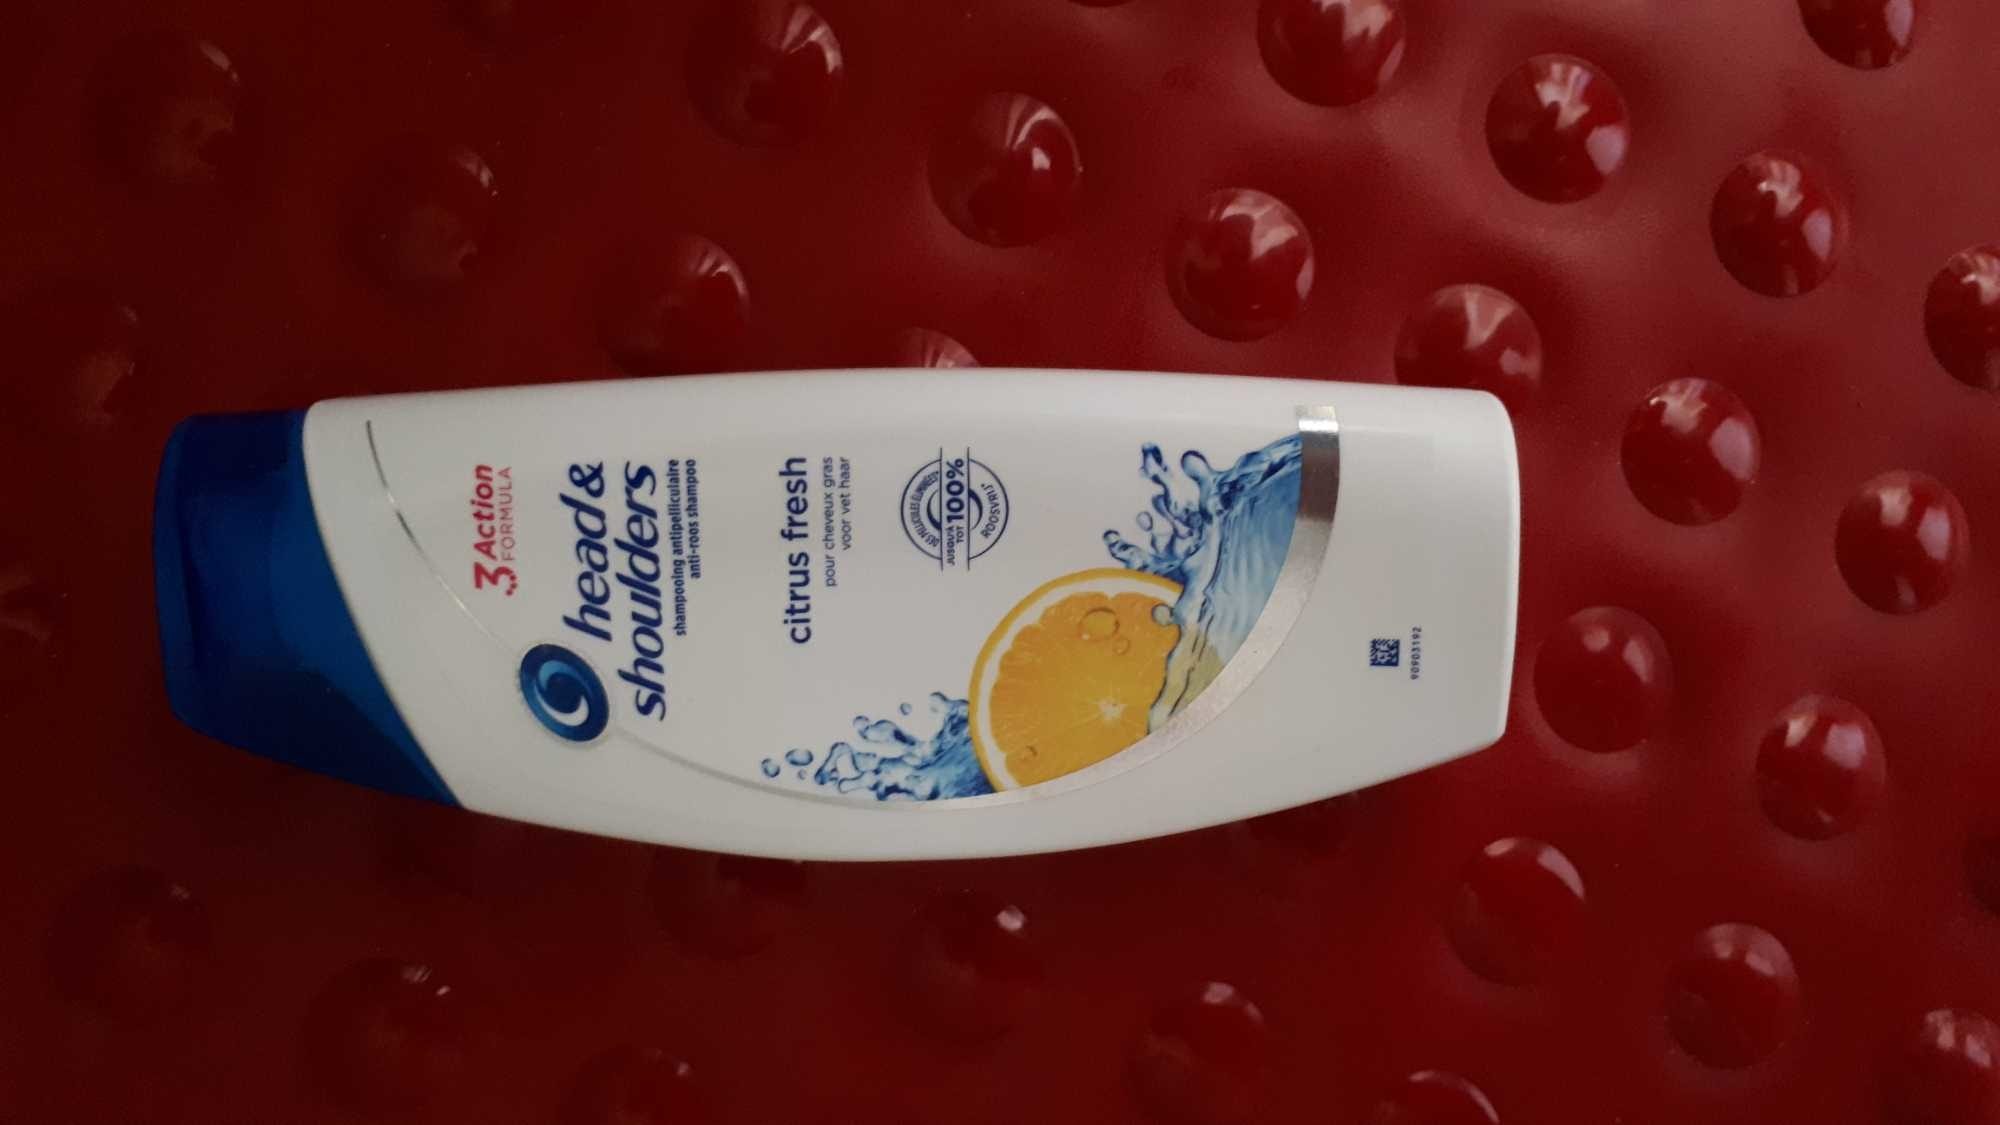 Shampoing citrus fresh - Product - fr